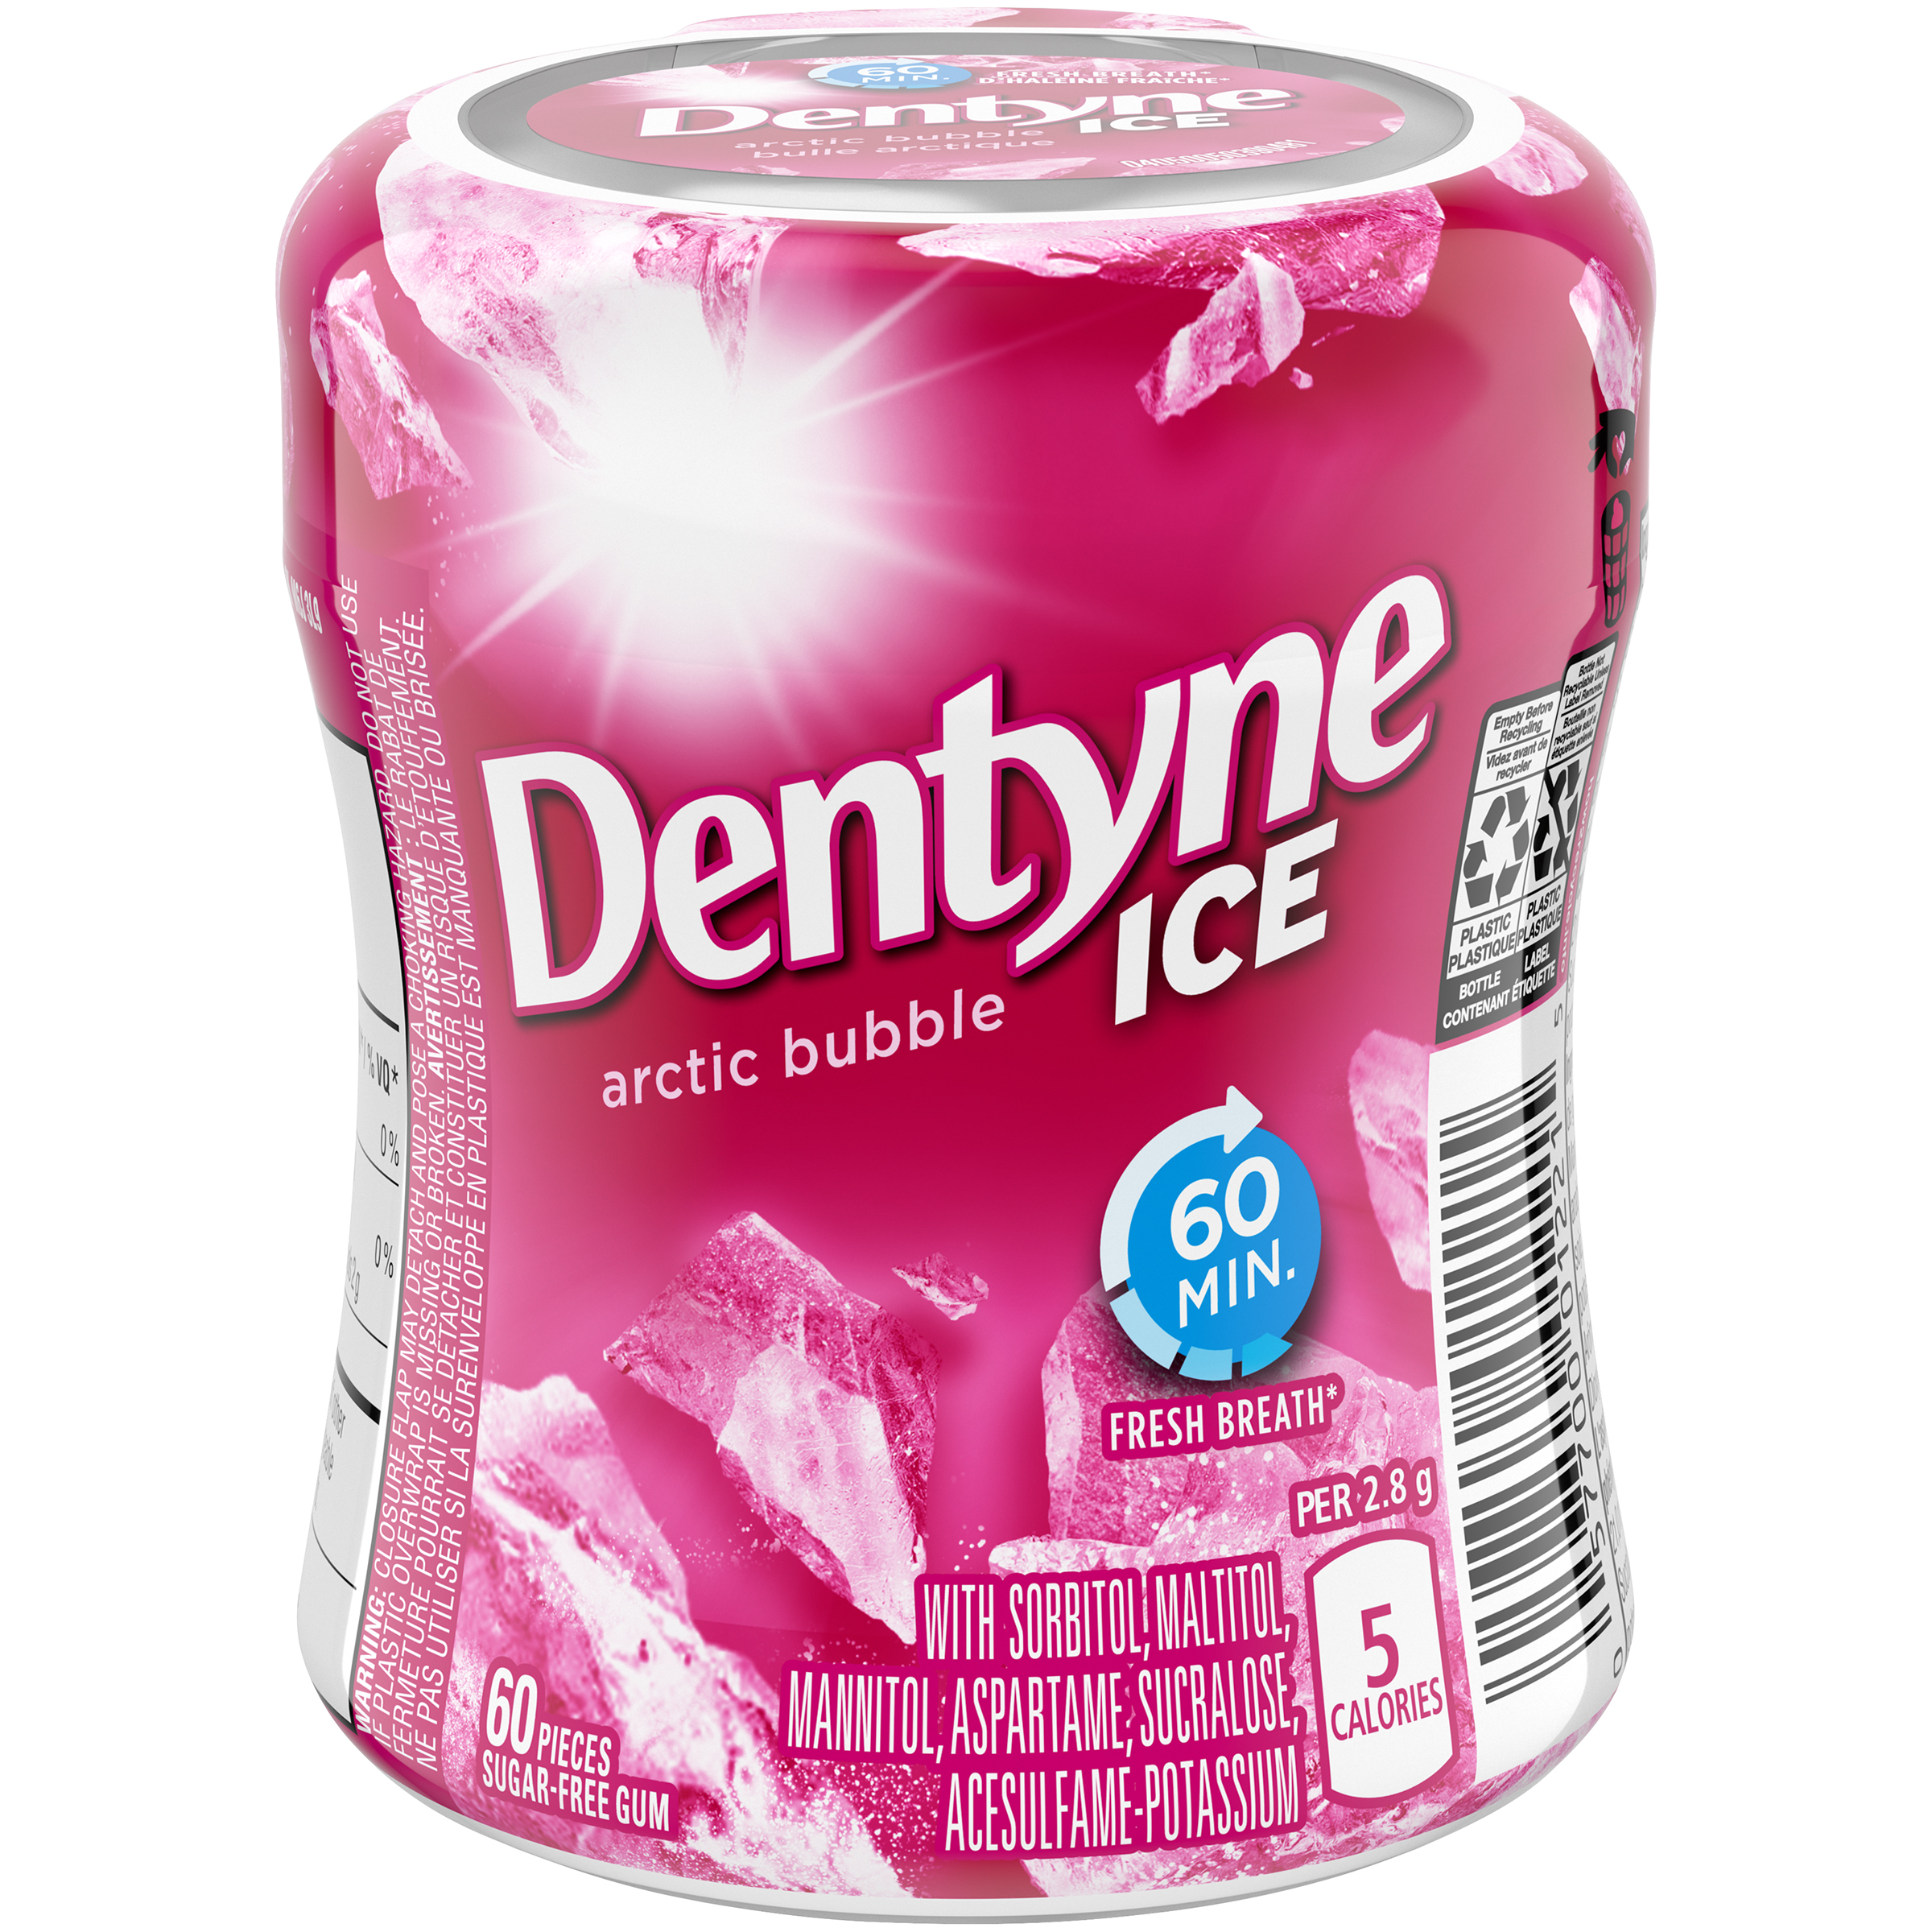 Dentyne Ice Arctic Bubble Gum 60 Count